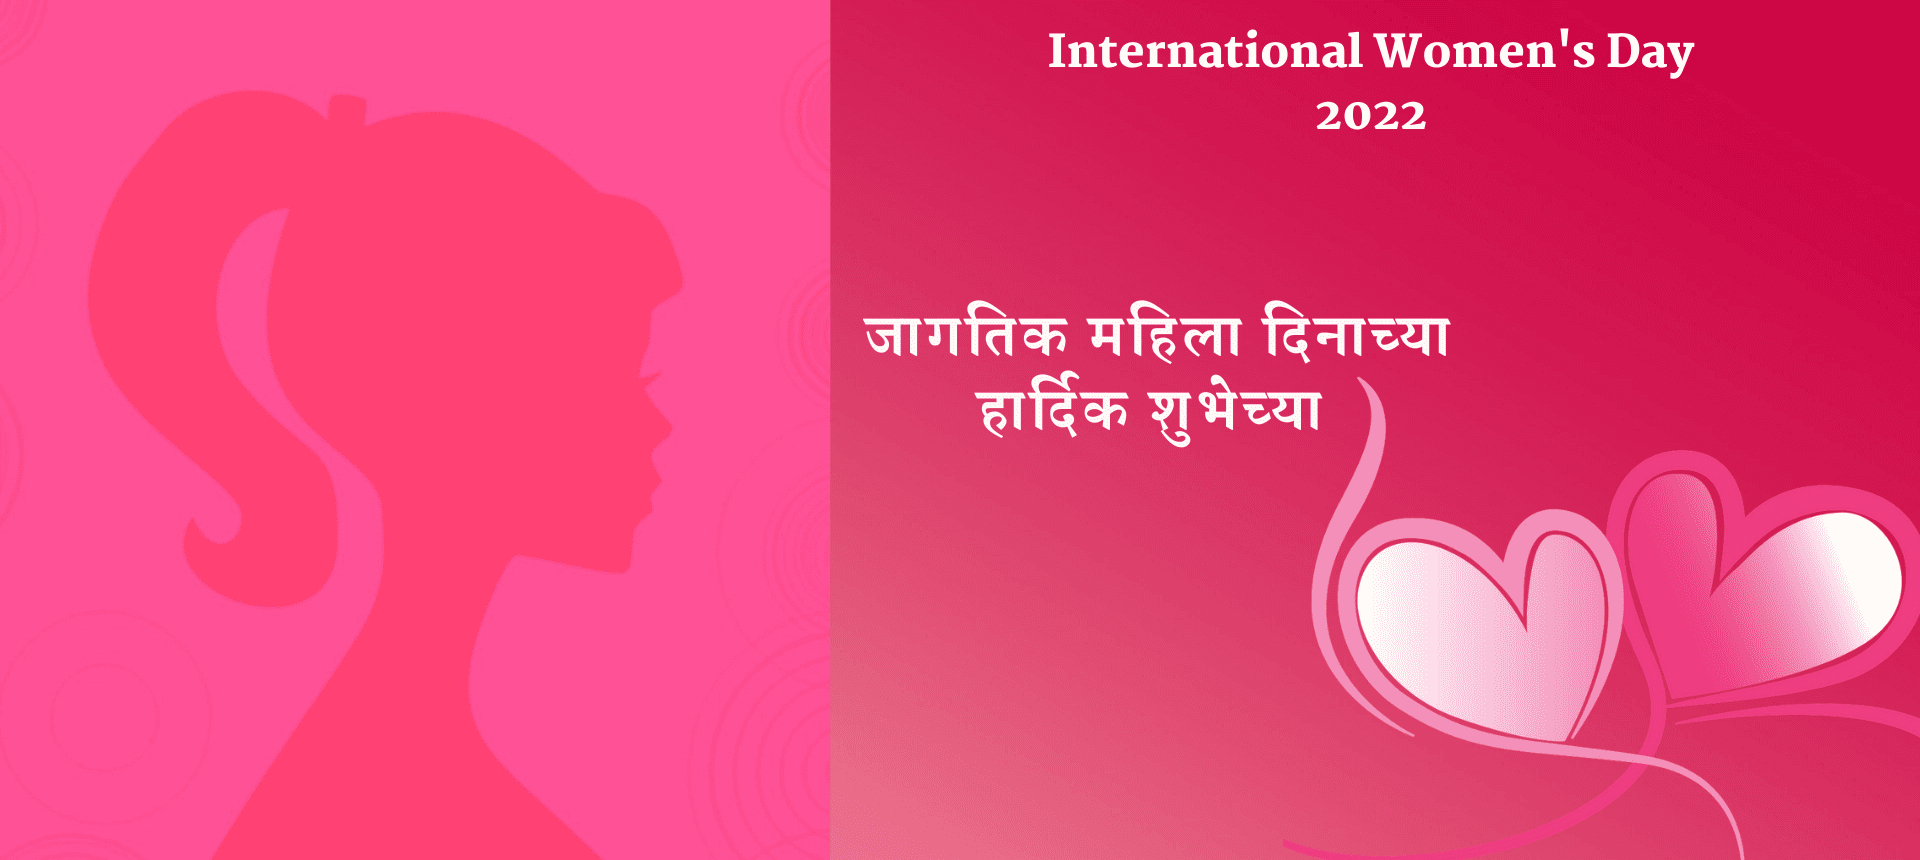 Women's Day Quotes In Marathi